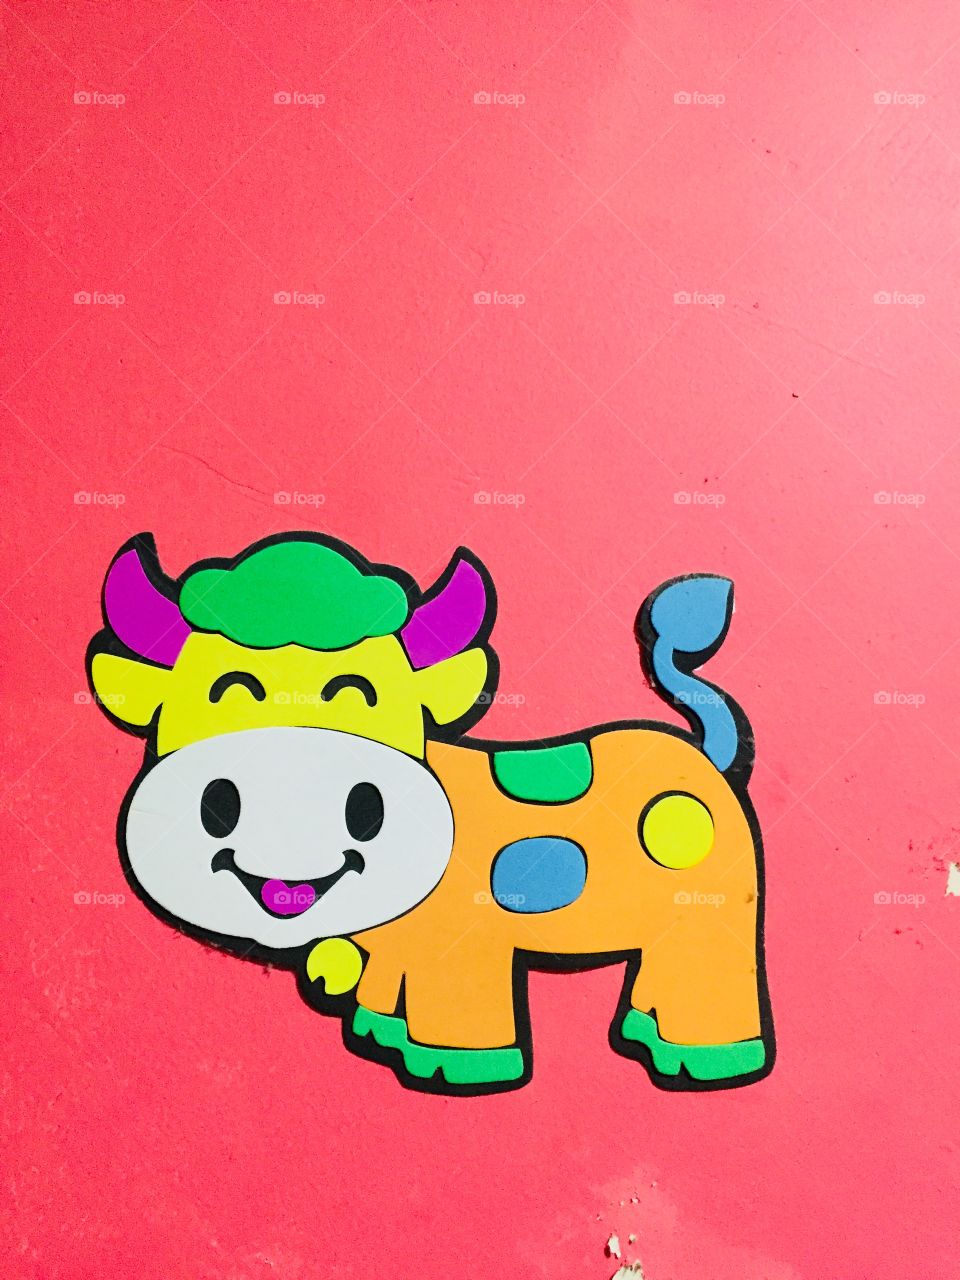 Cow wall photos for kids (cartoons )